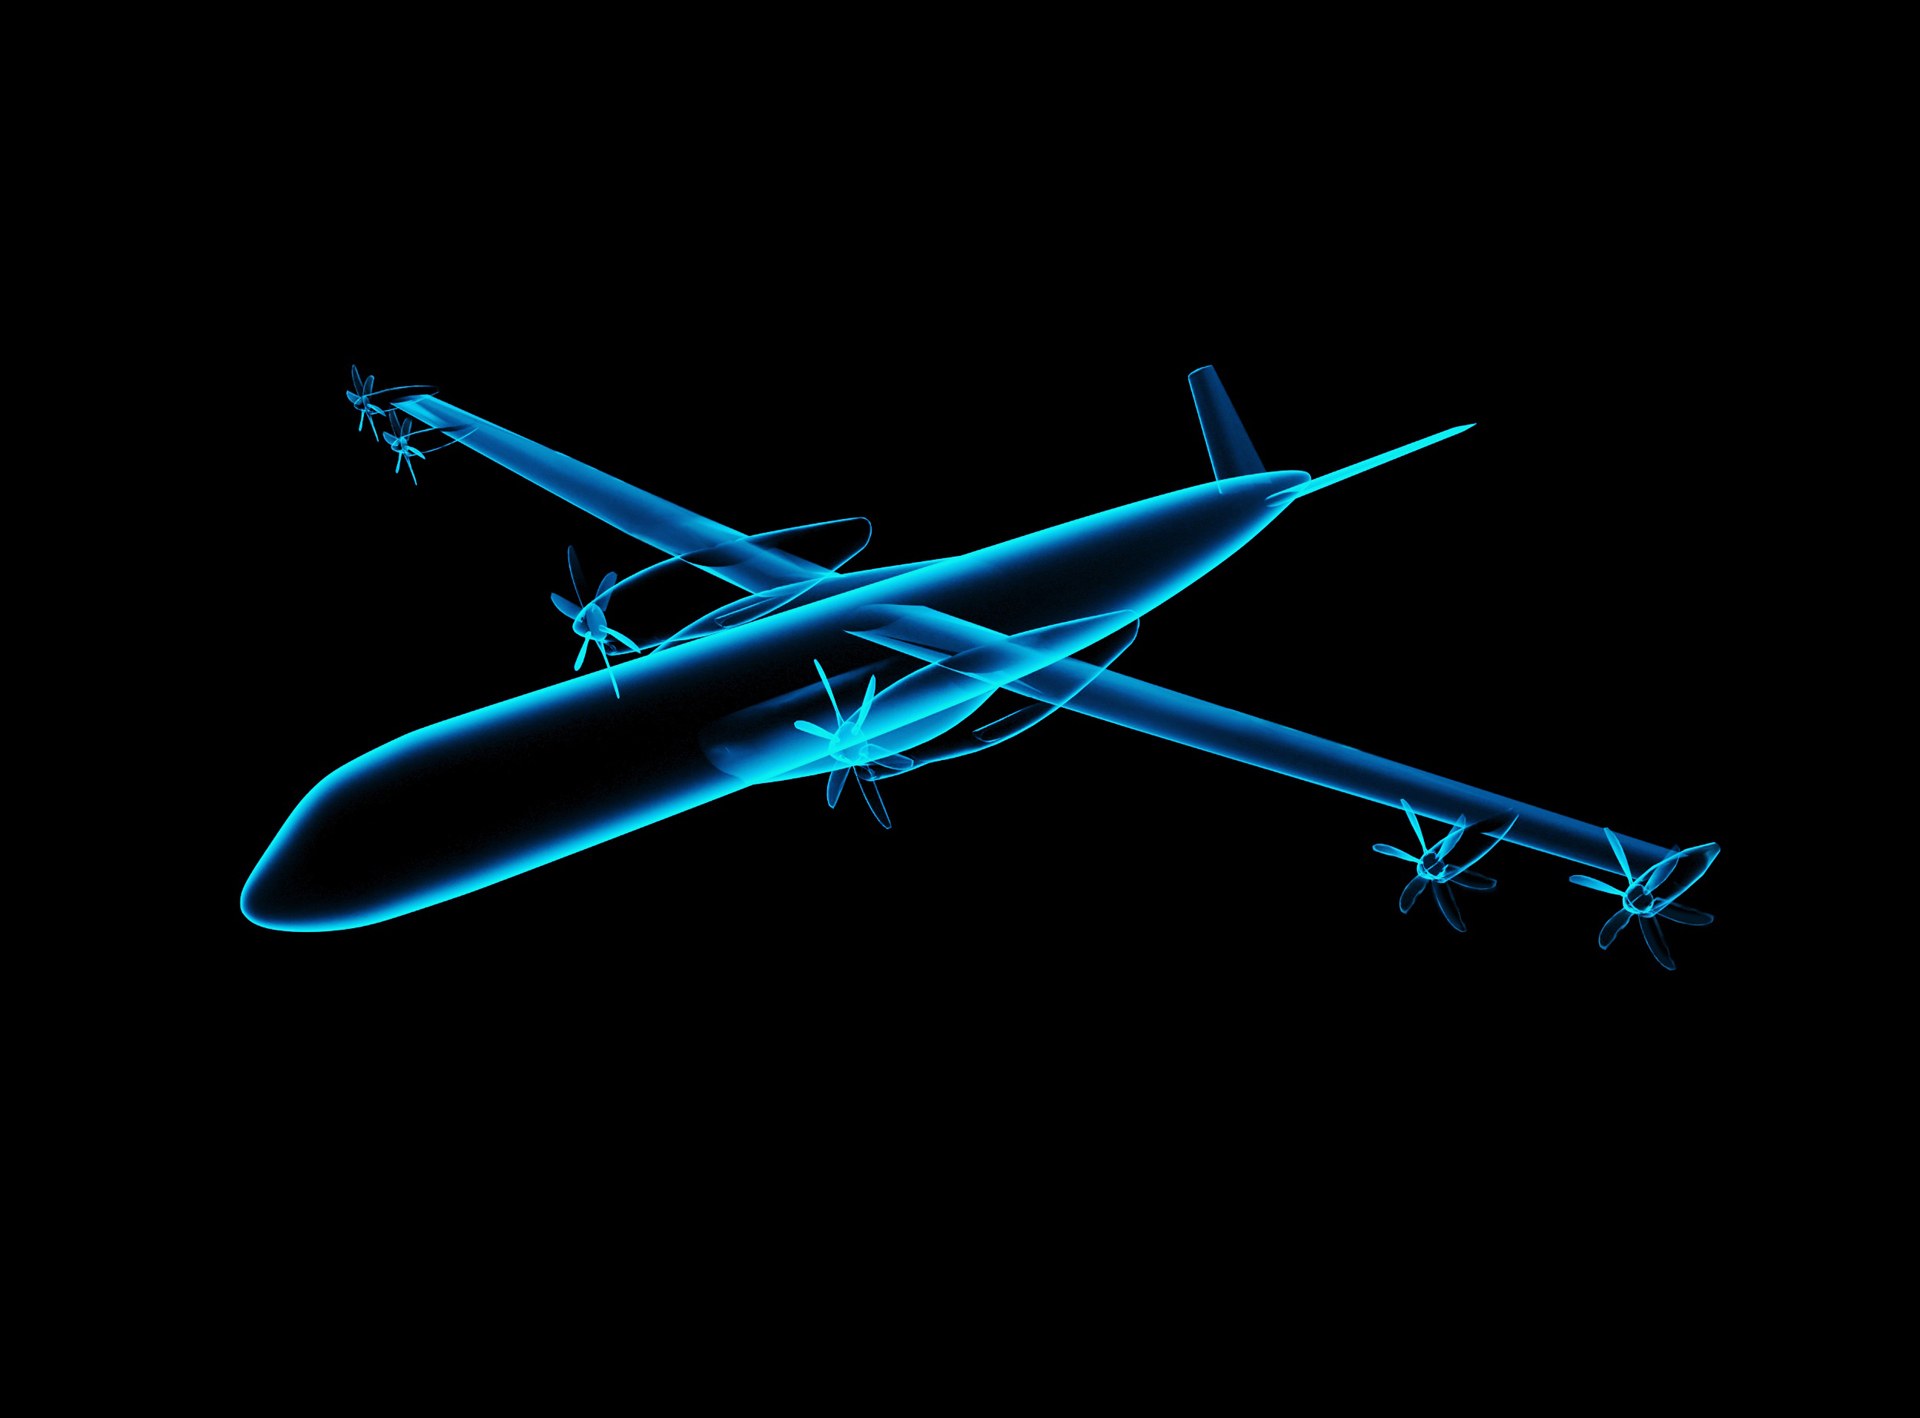 DLR design for a hydrogen-powered aircraft